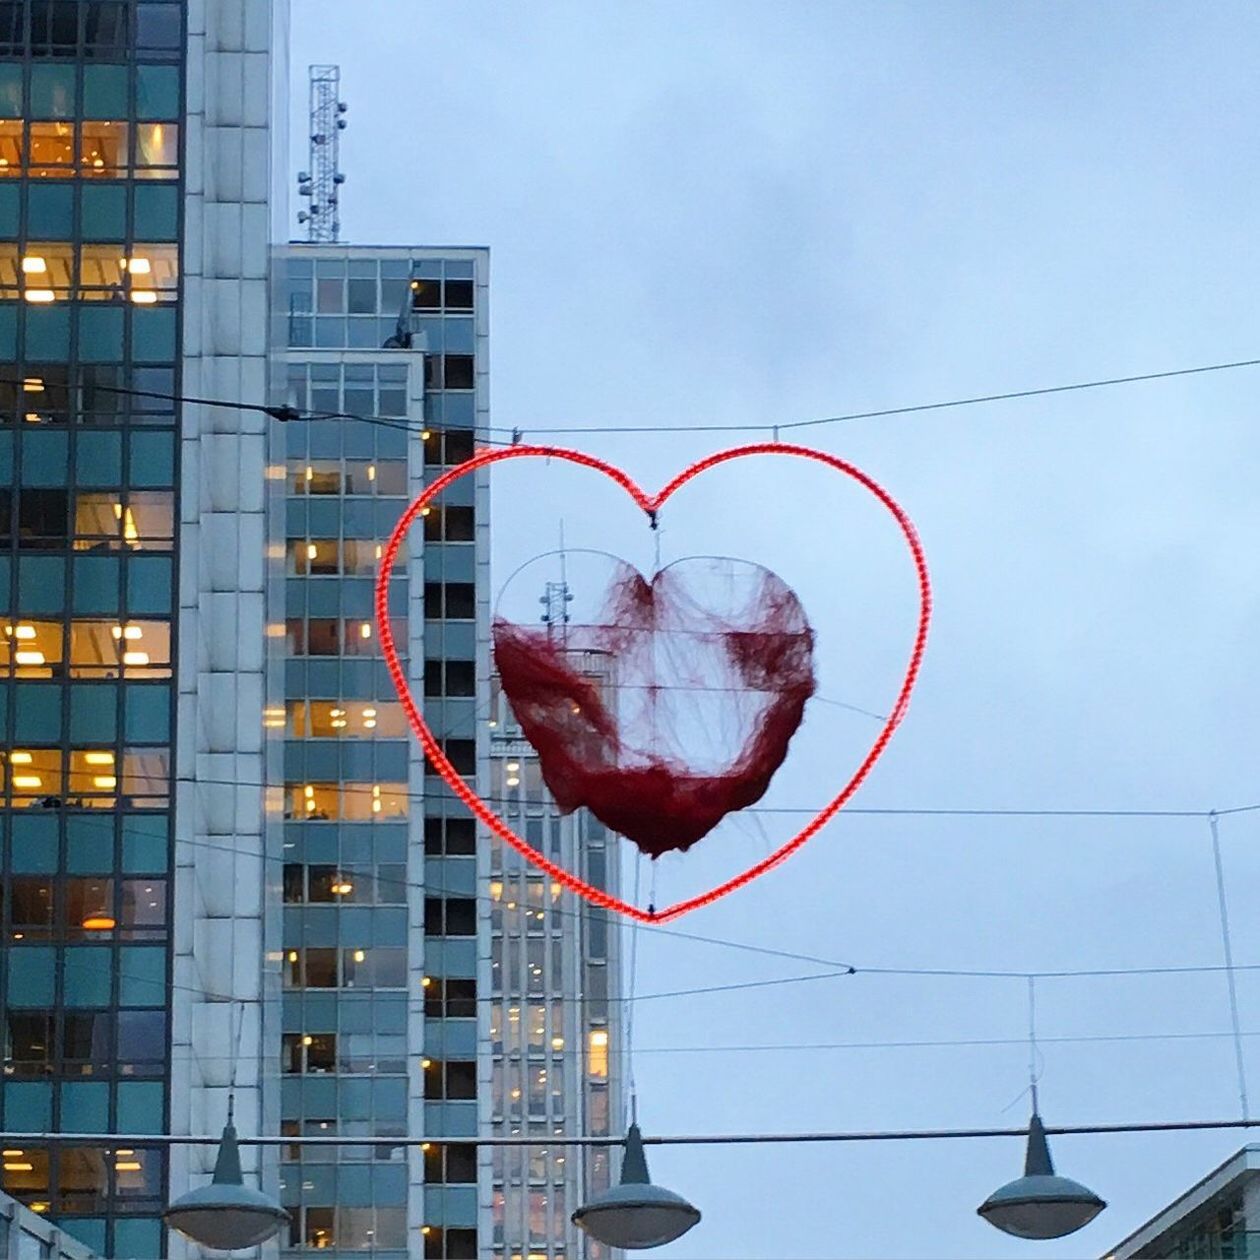 DIGITAL COMPOSITE IMAGE OF HEART SHAPE ON GLASS BUILDING AGAINST SKY